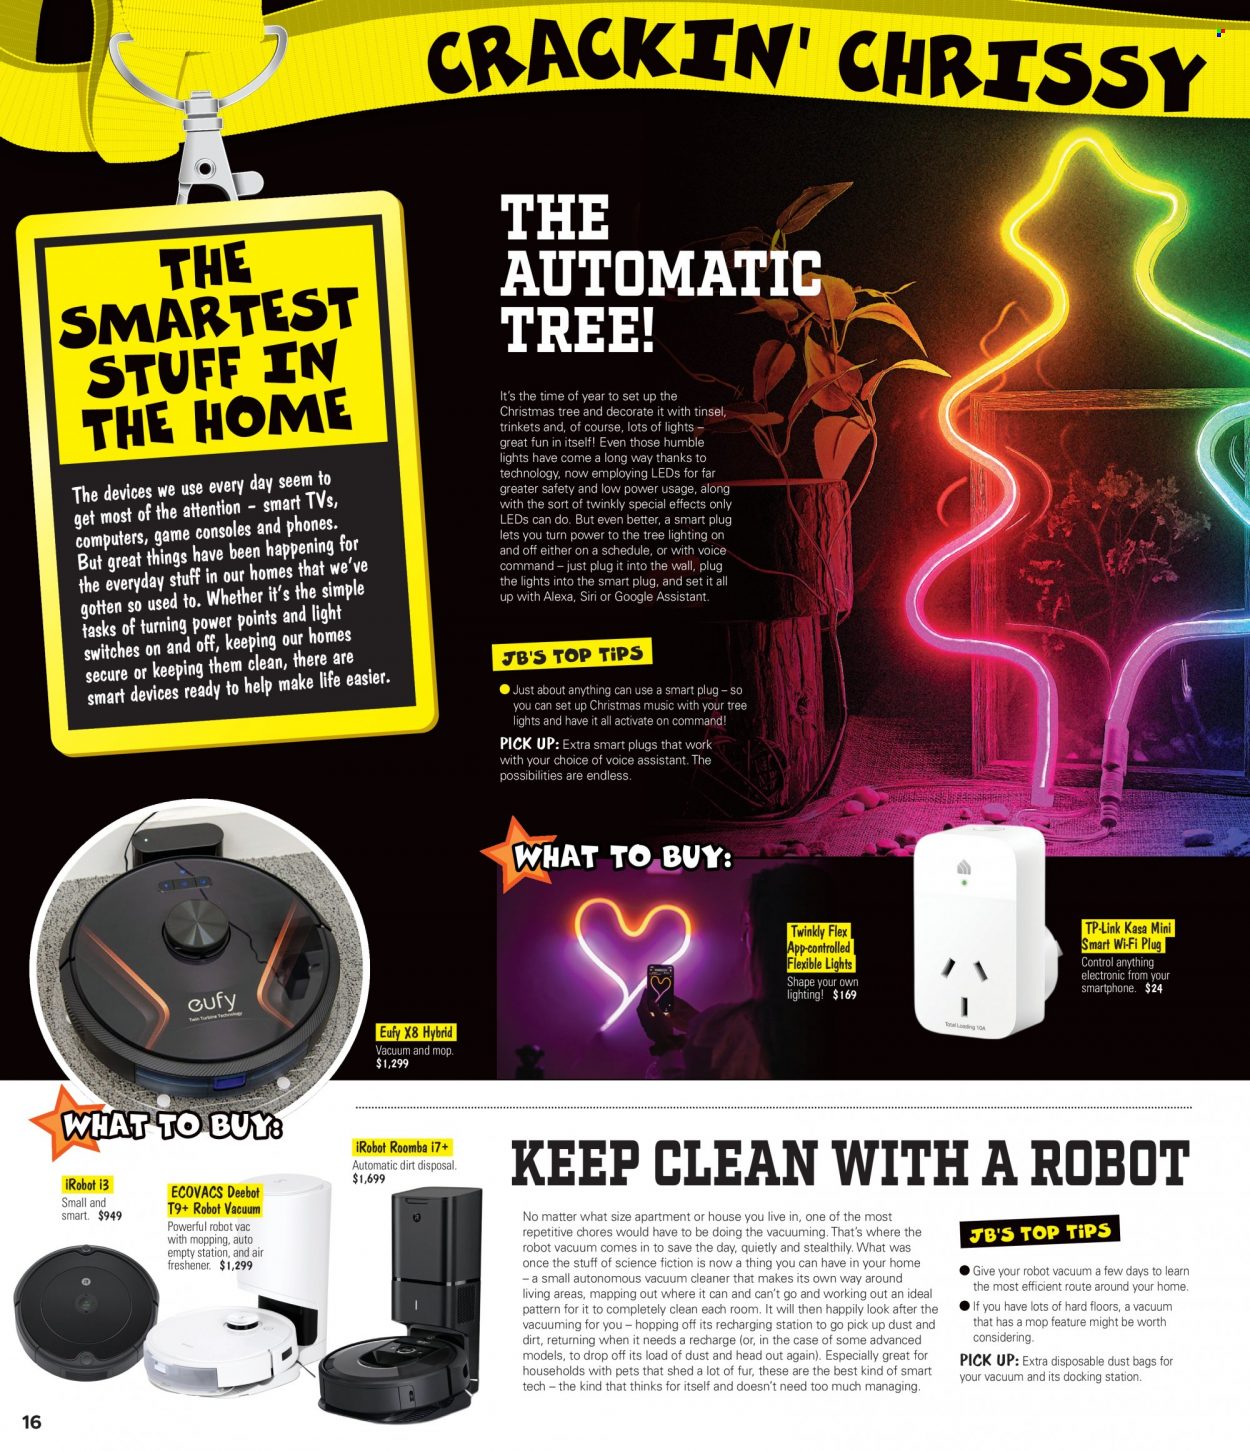 thumbnail - JB Hi-Fi Catalogue - 11 Nov 2021 - 24 Dec 2021 - Sales products - tp-link, TV, Roomba, iRobot, Ecovacs, robot vacuum, lighting, tree lights, smart plug. Page 16.